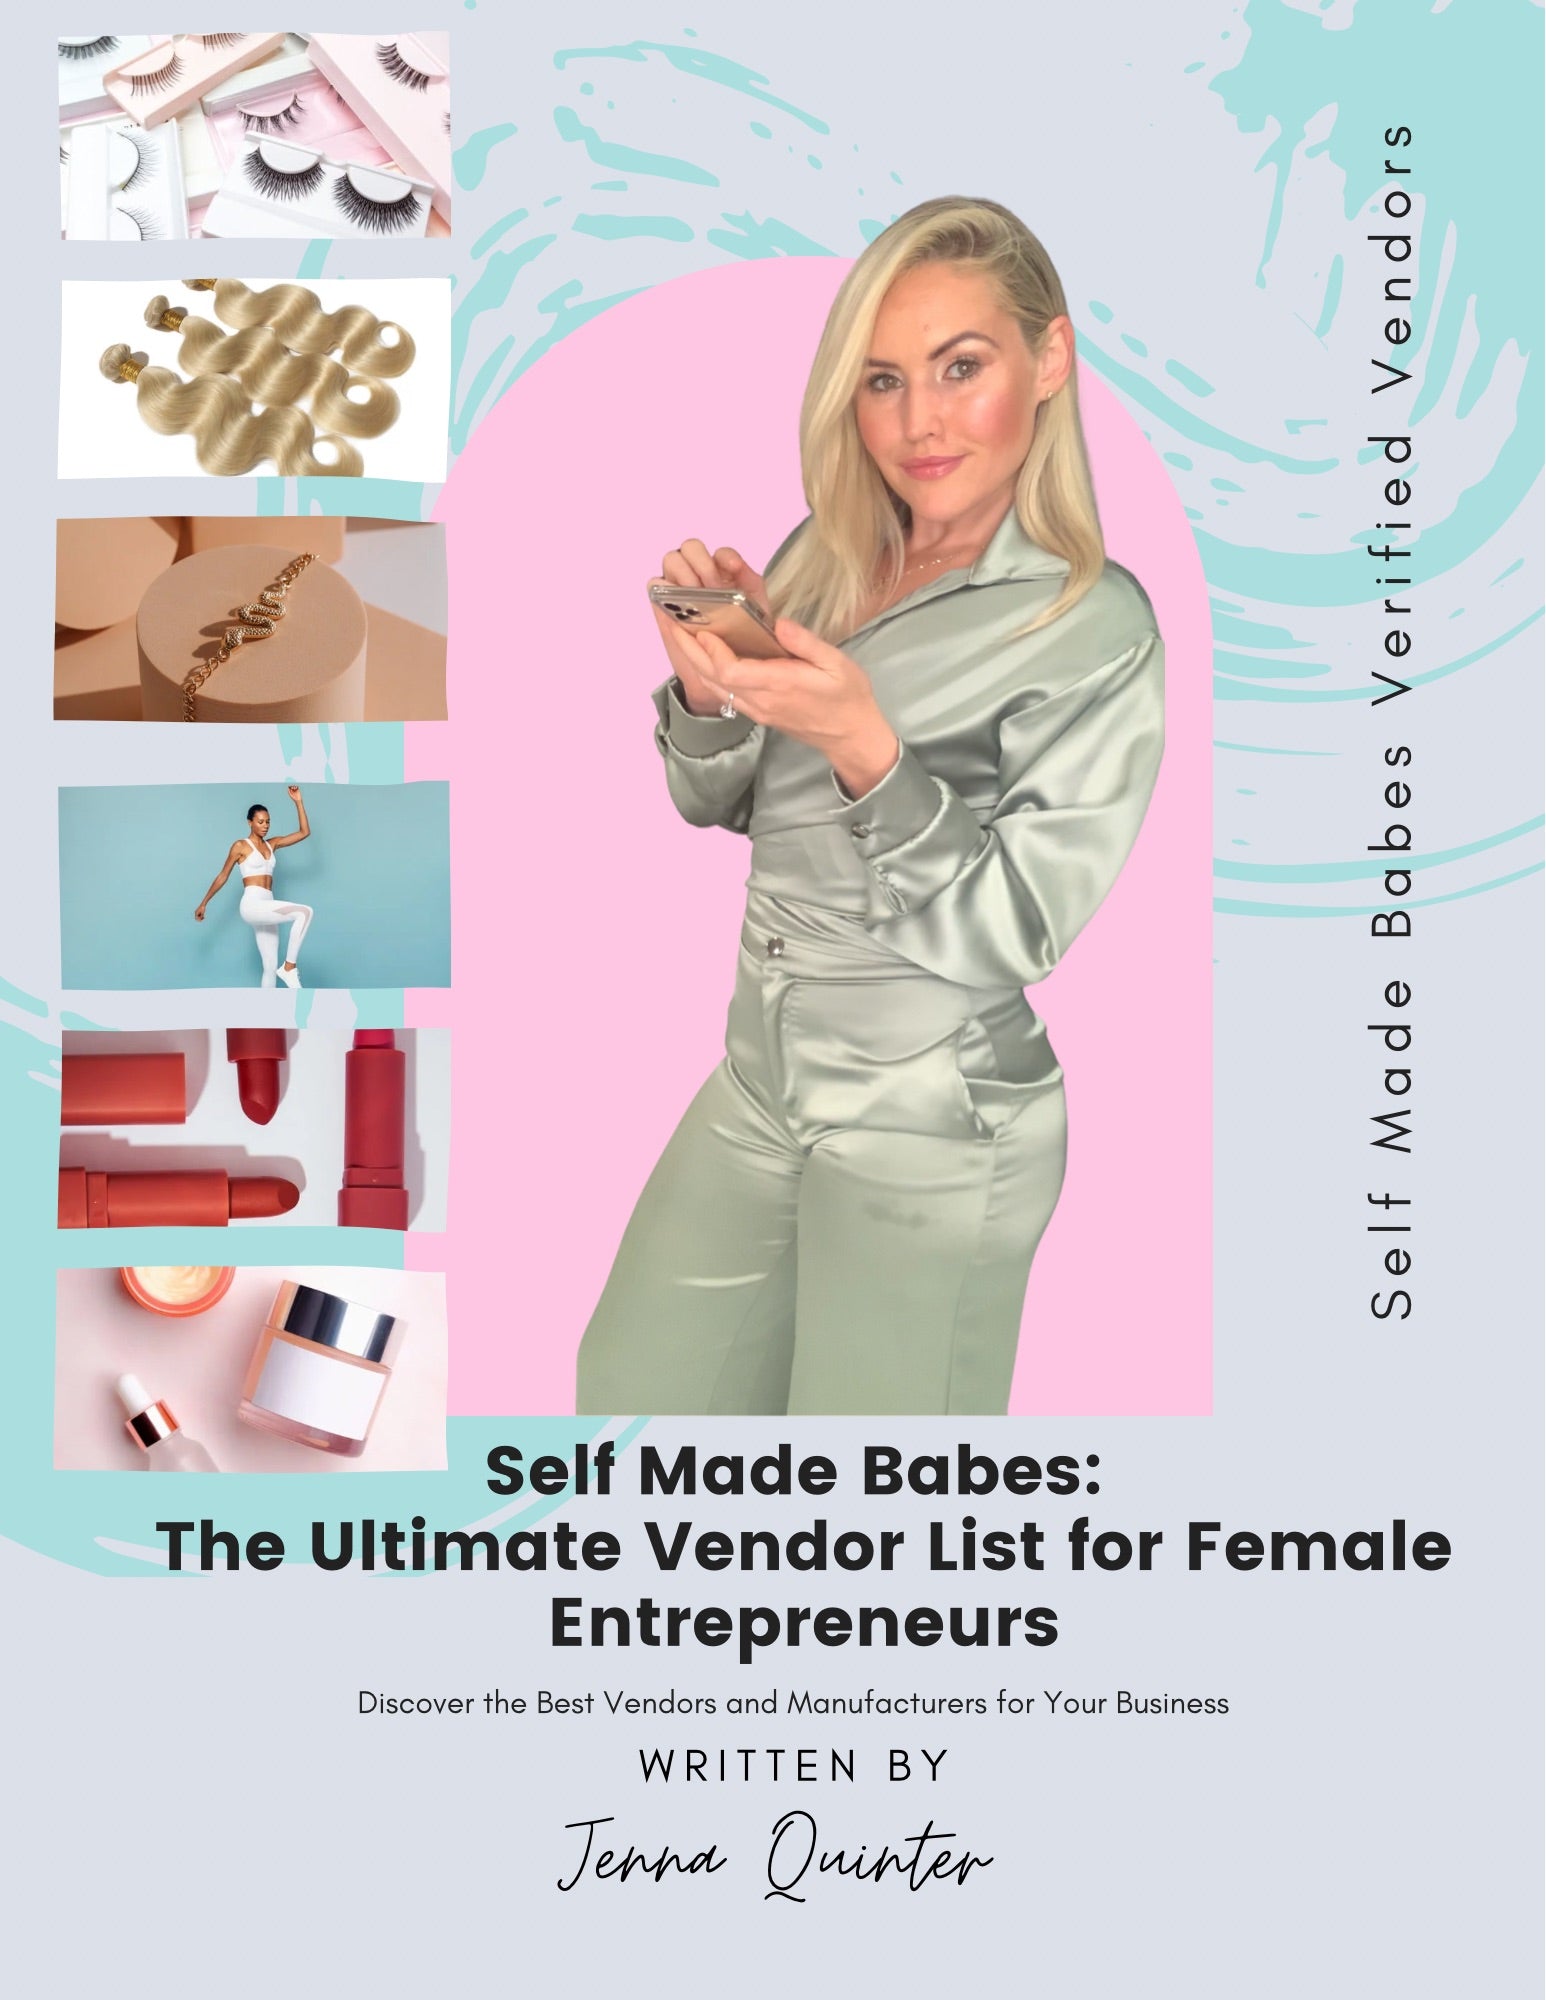 Self Made Babes: The Ultimate Vendor List for Female Entrepreneurs